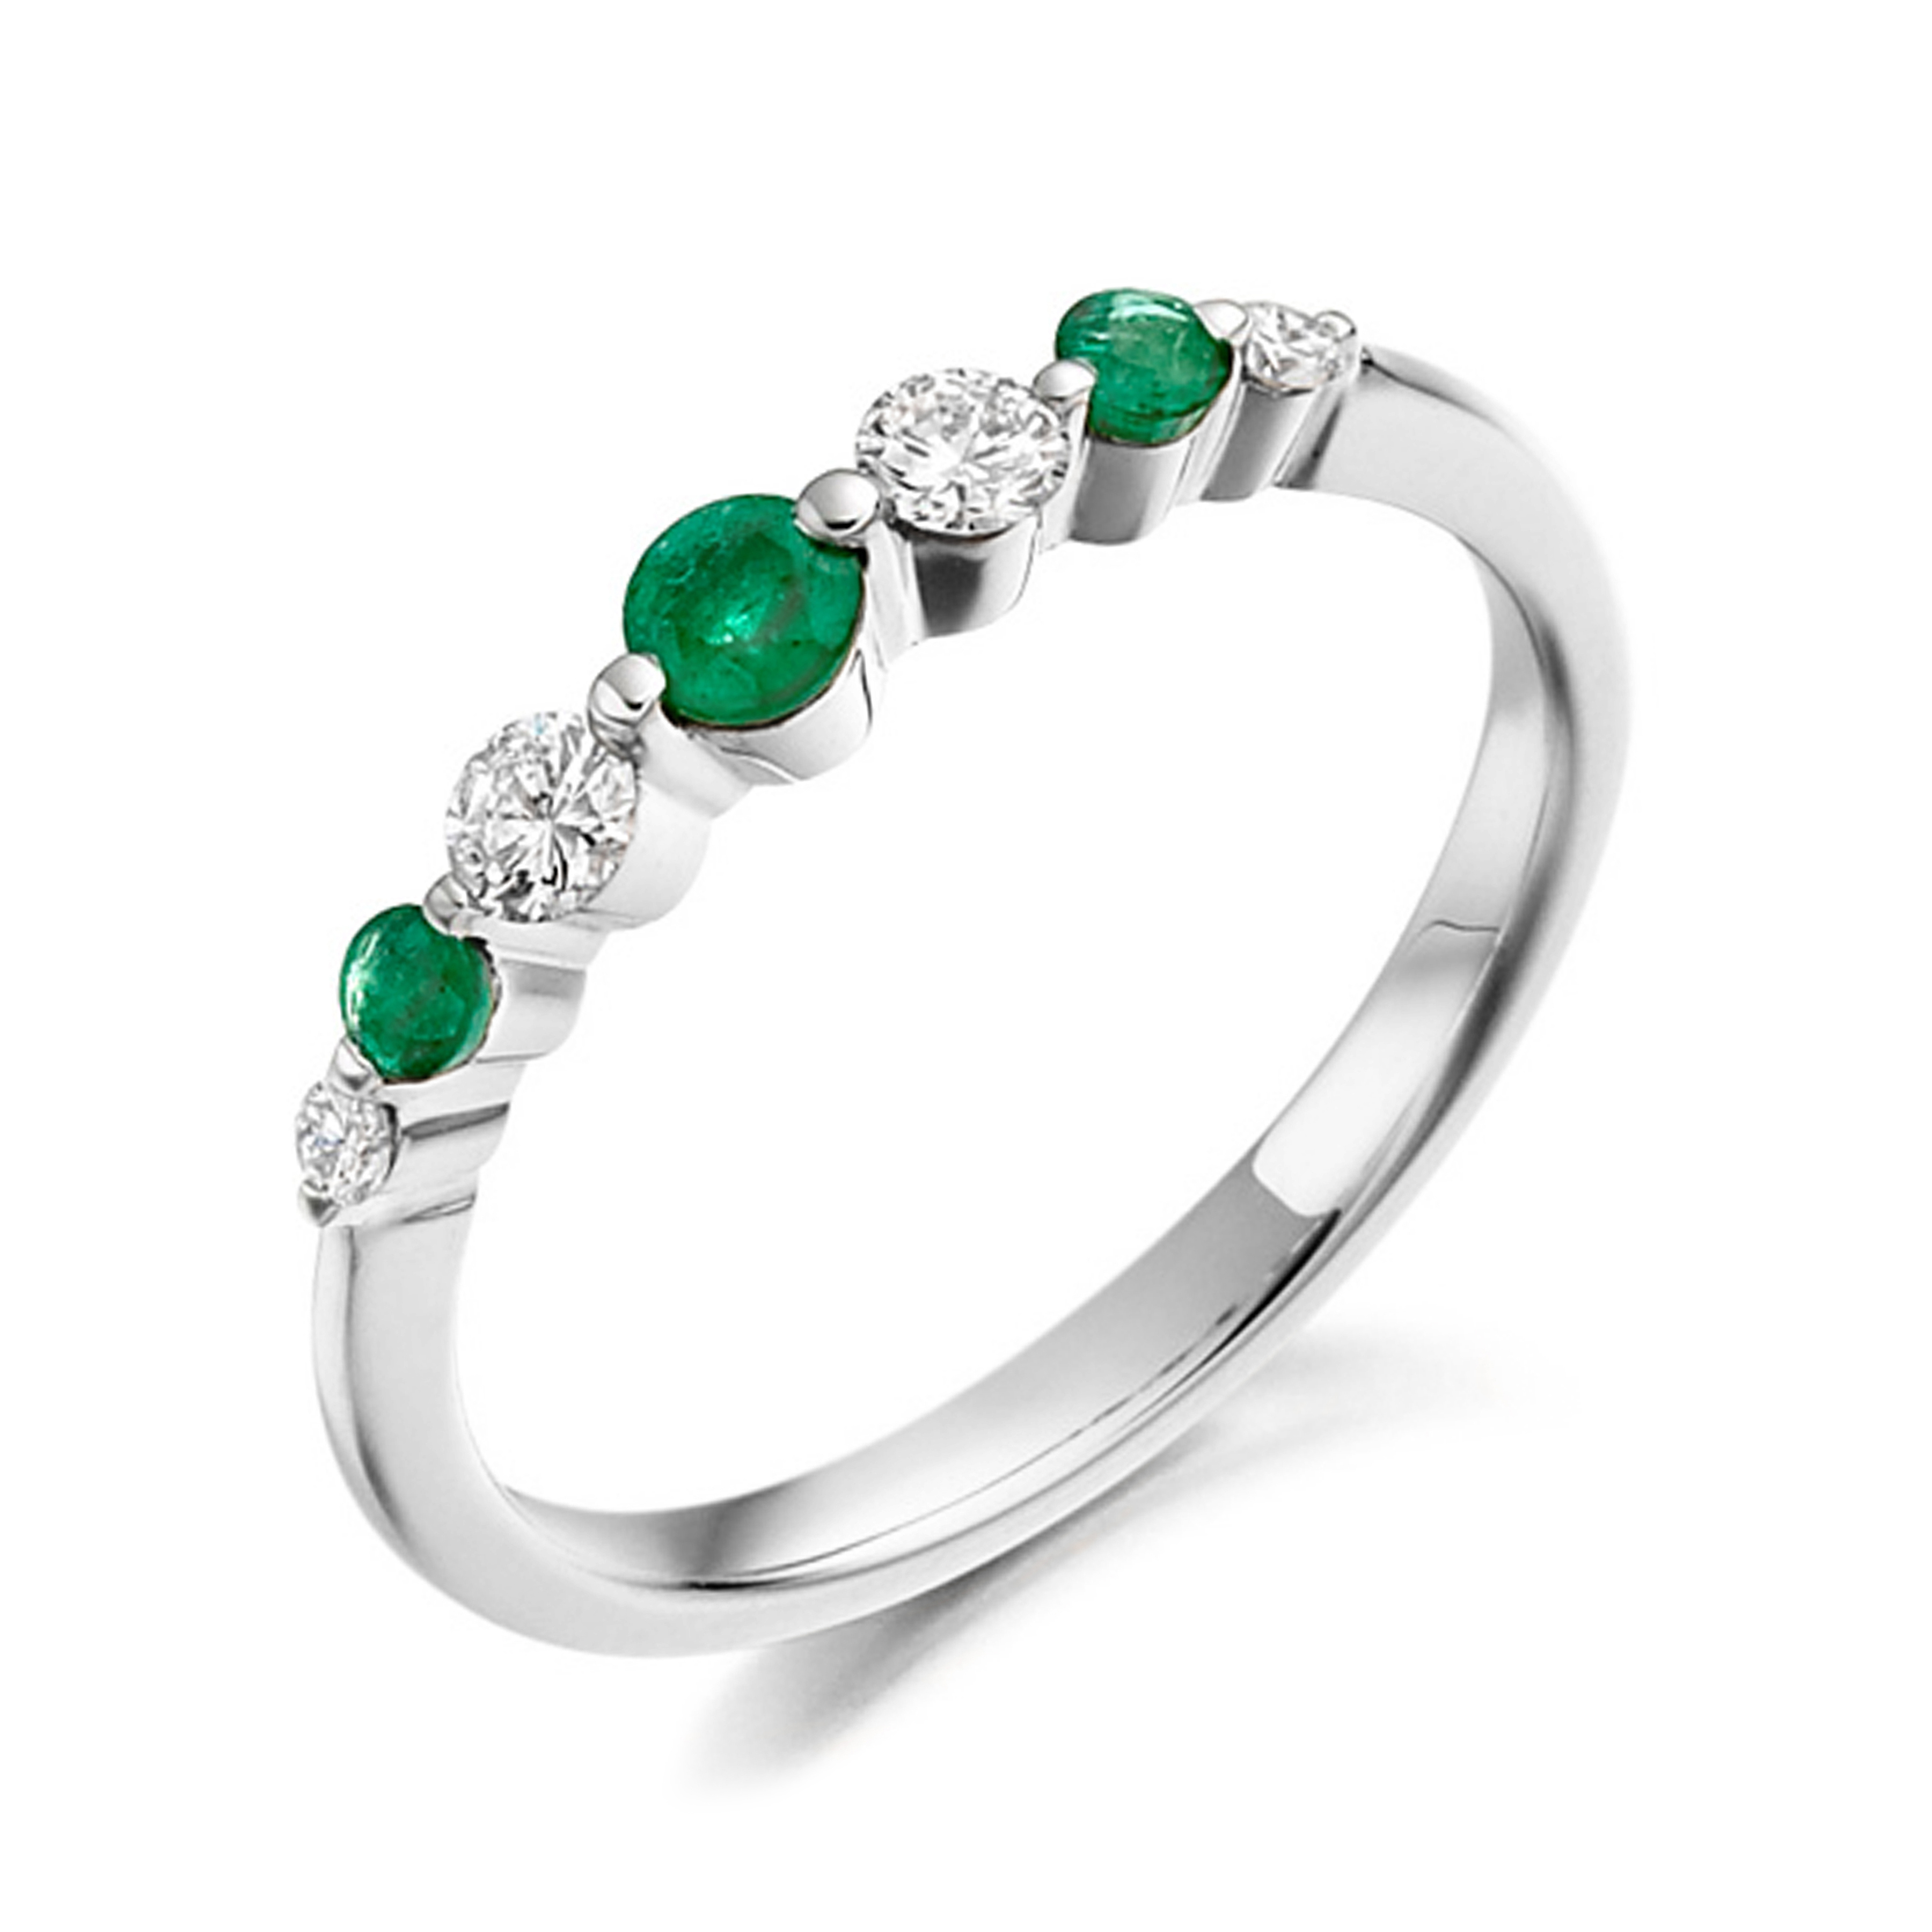 4Mm,3Mm Round Emerald Cut Seven Stone Diamond And Gemstone Ring